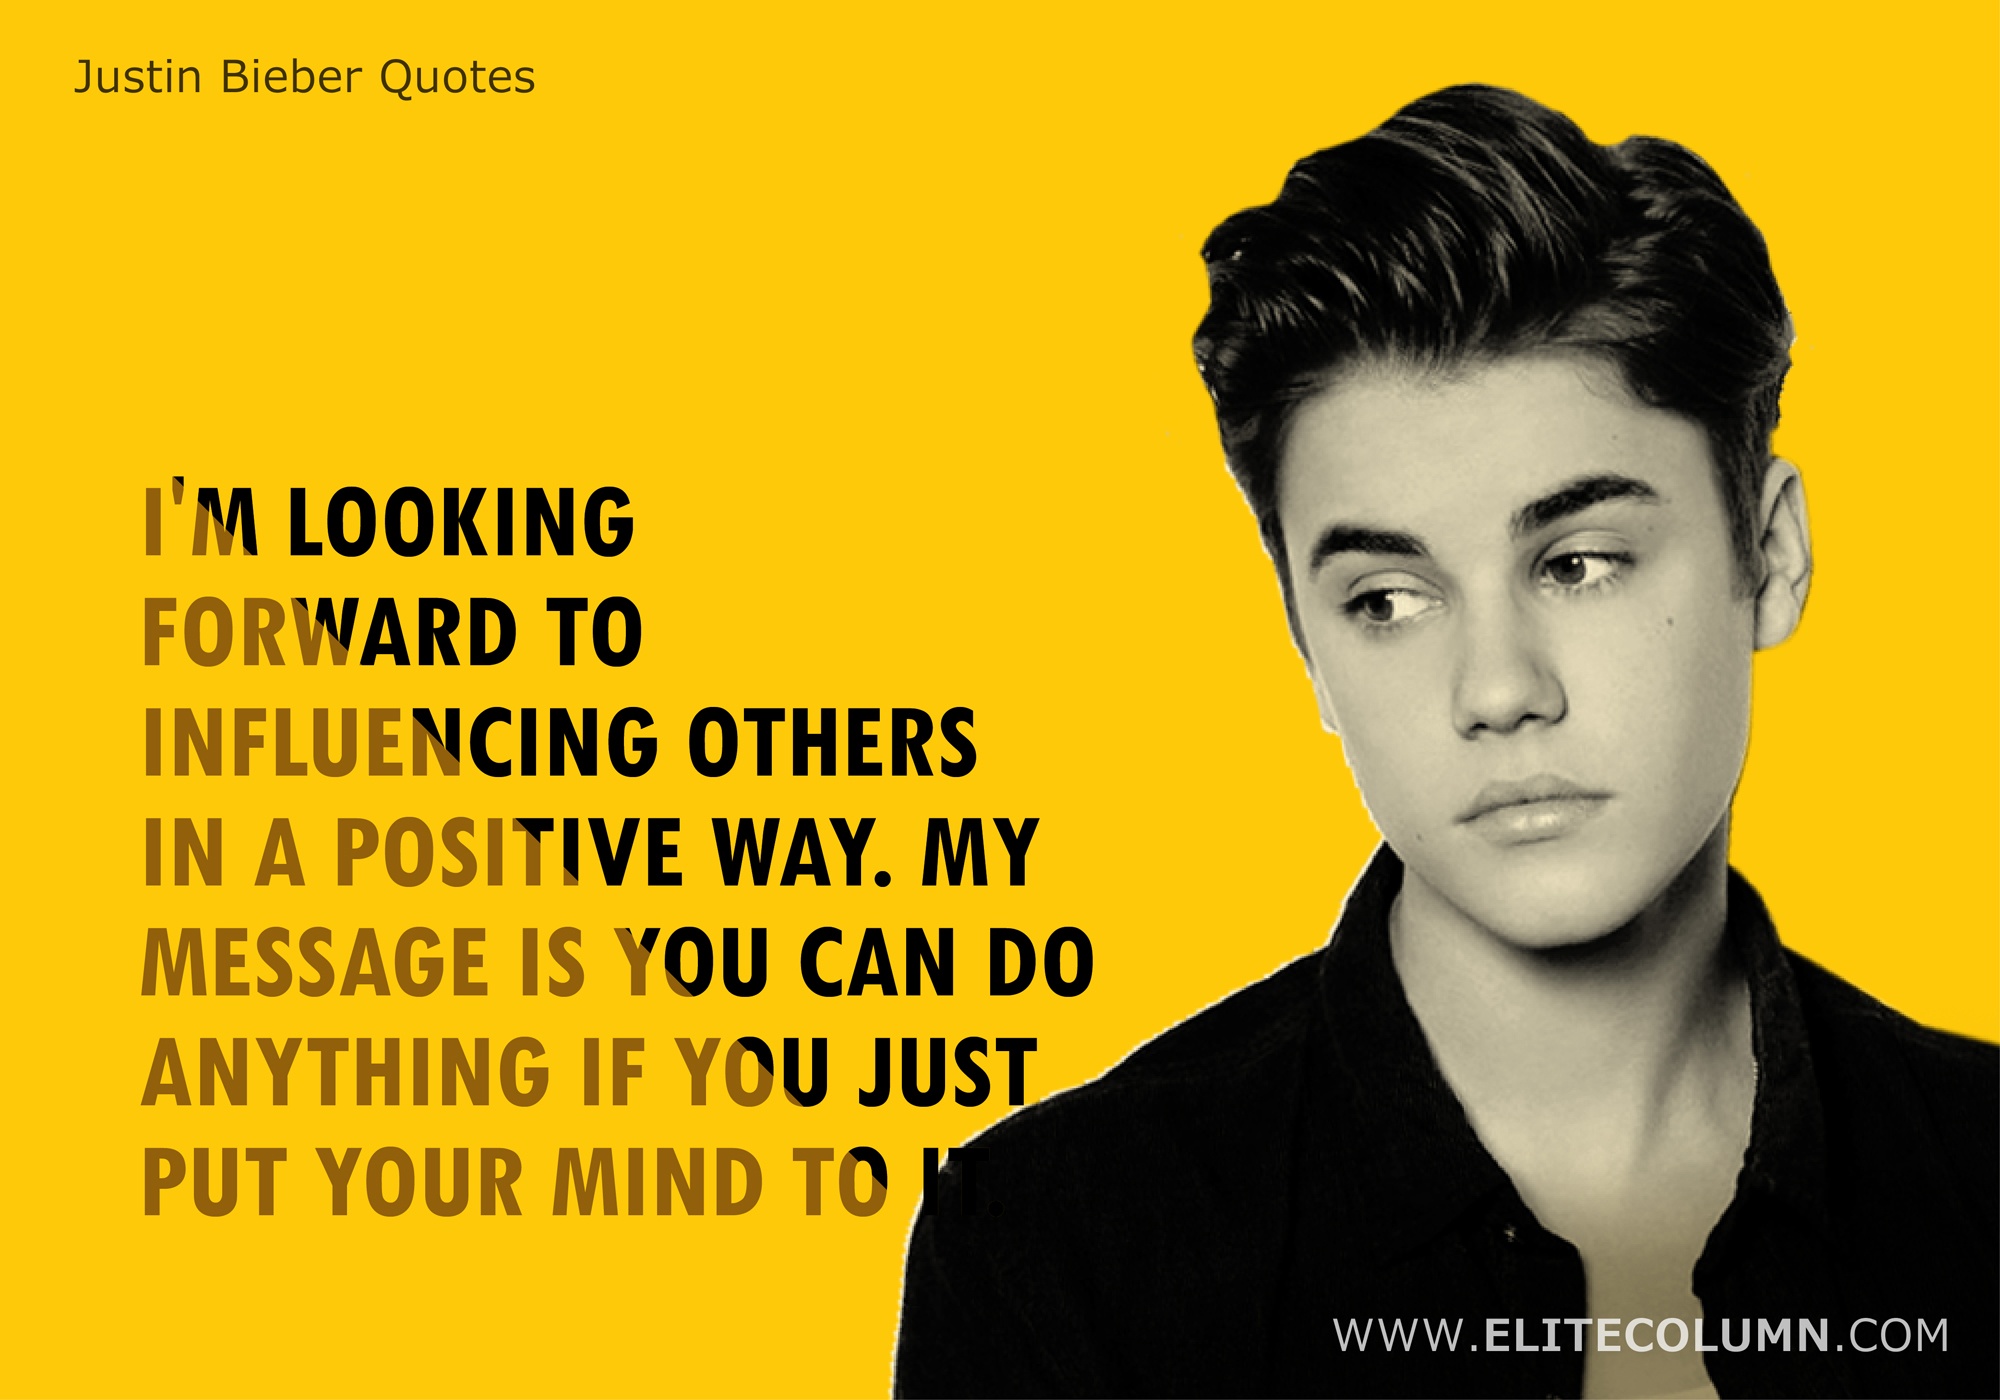 Justin Bieber Quotes (8)